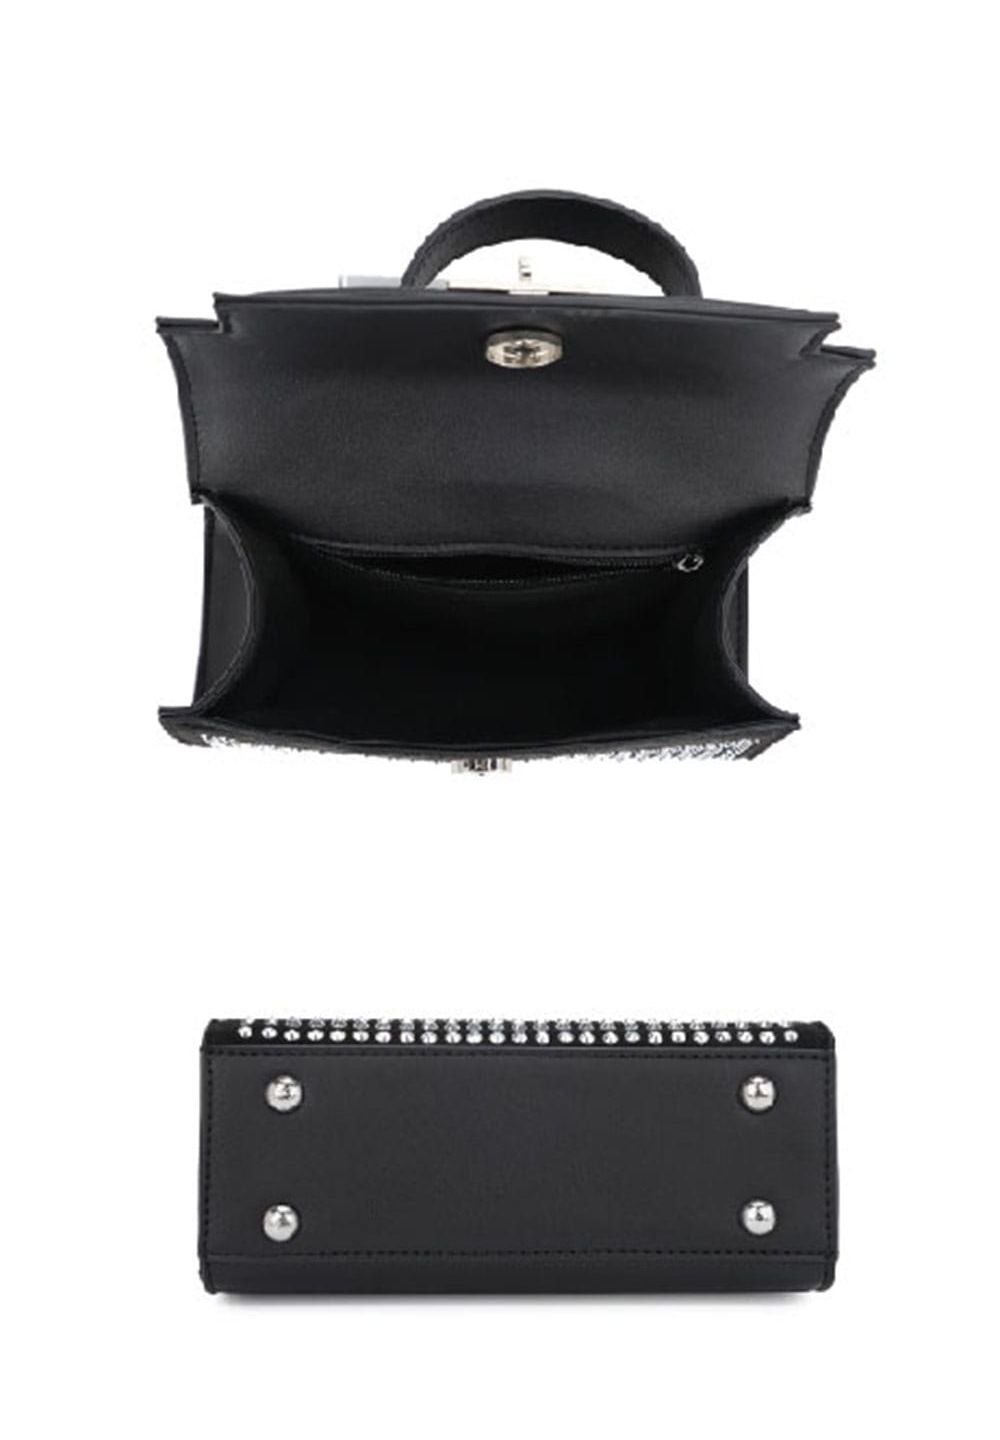 Rhinestone Handbag Black